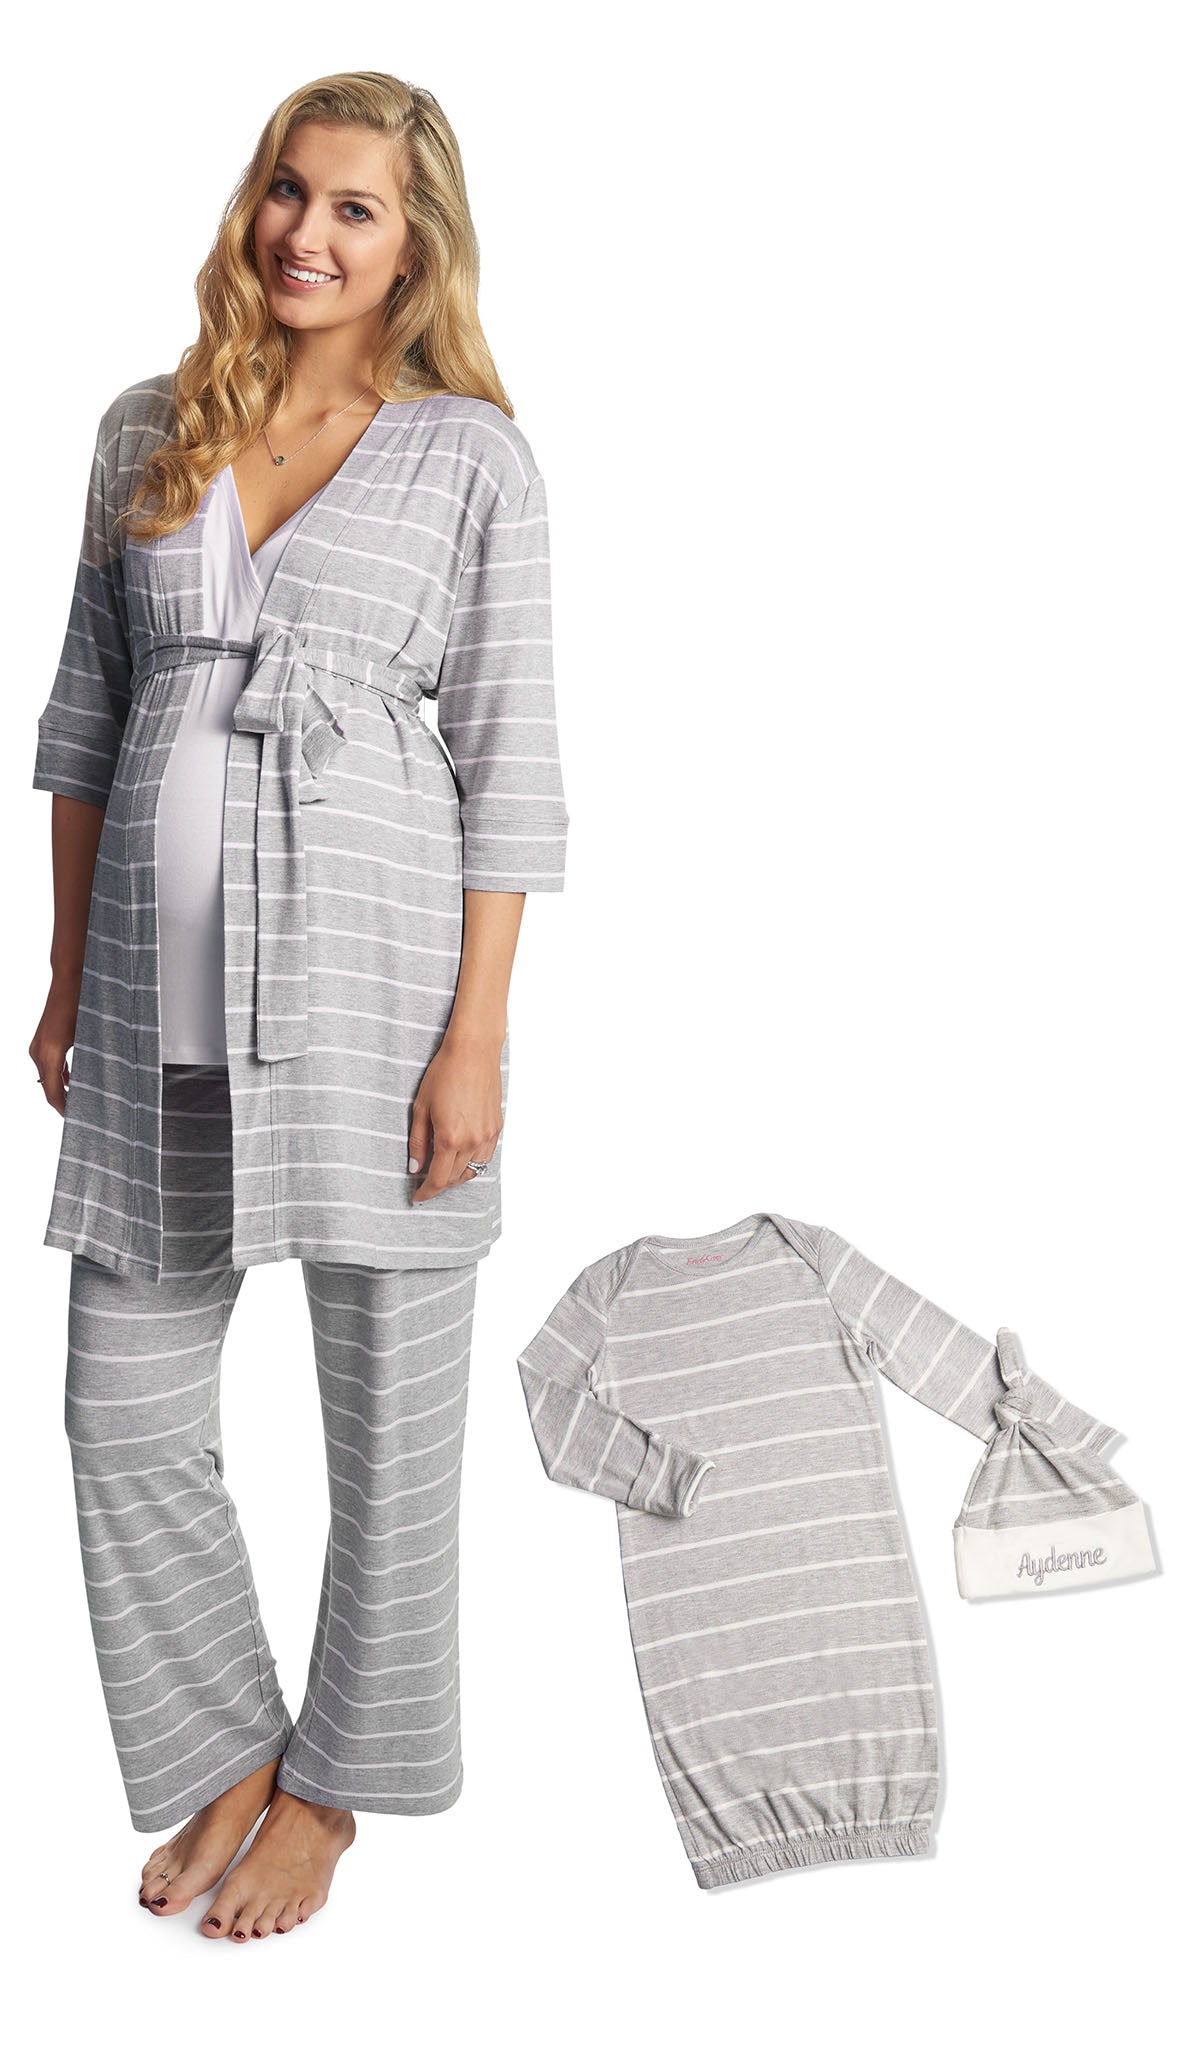 Everly Grey 5-Piece Maternity And Nursing PJ Set